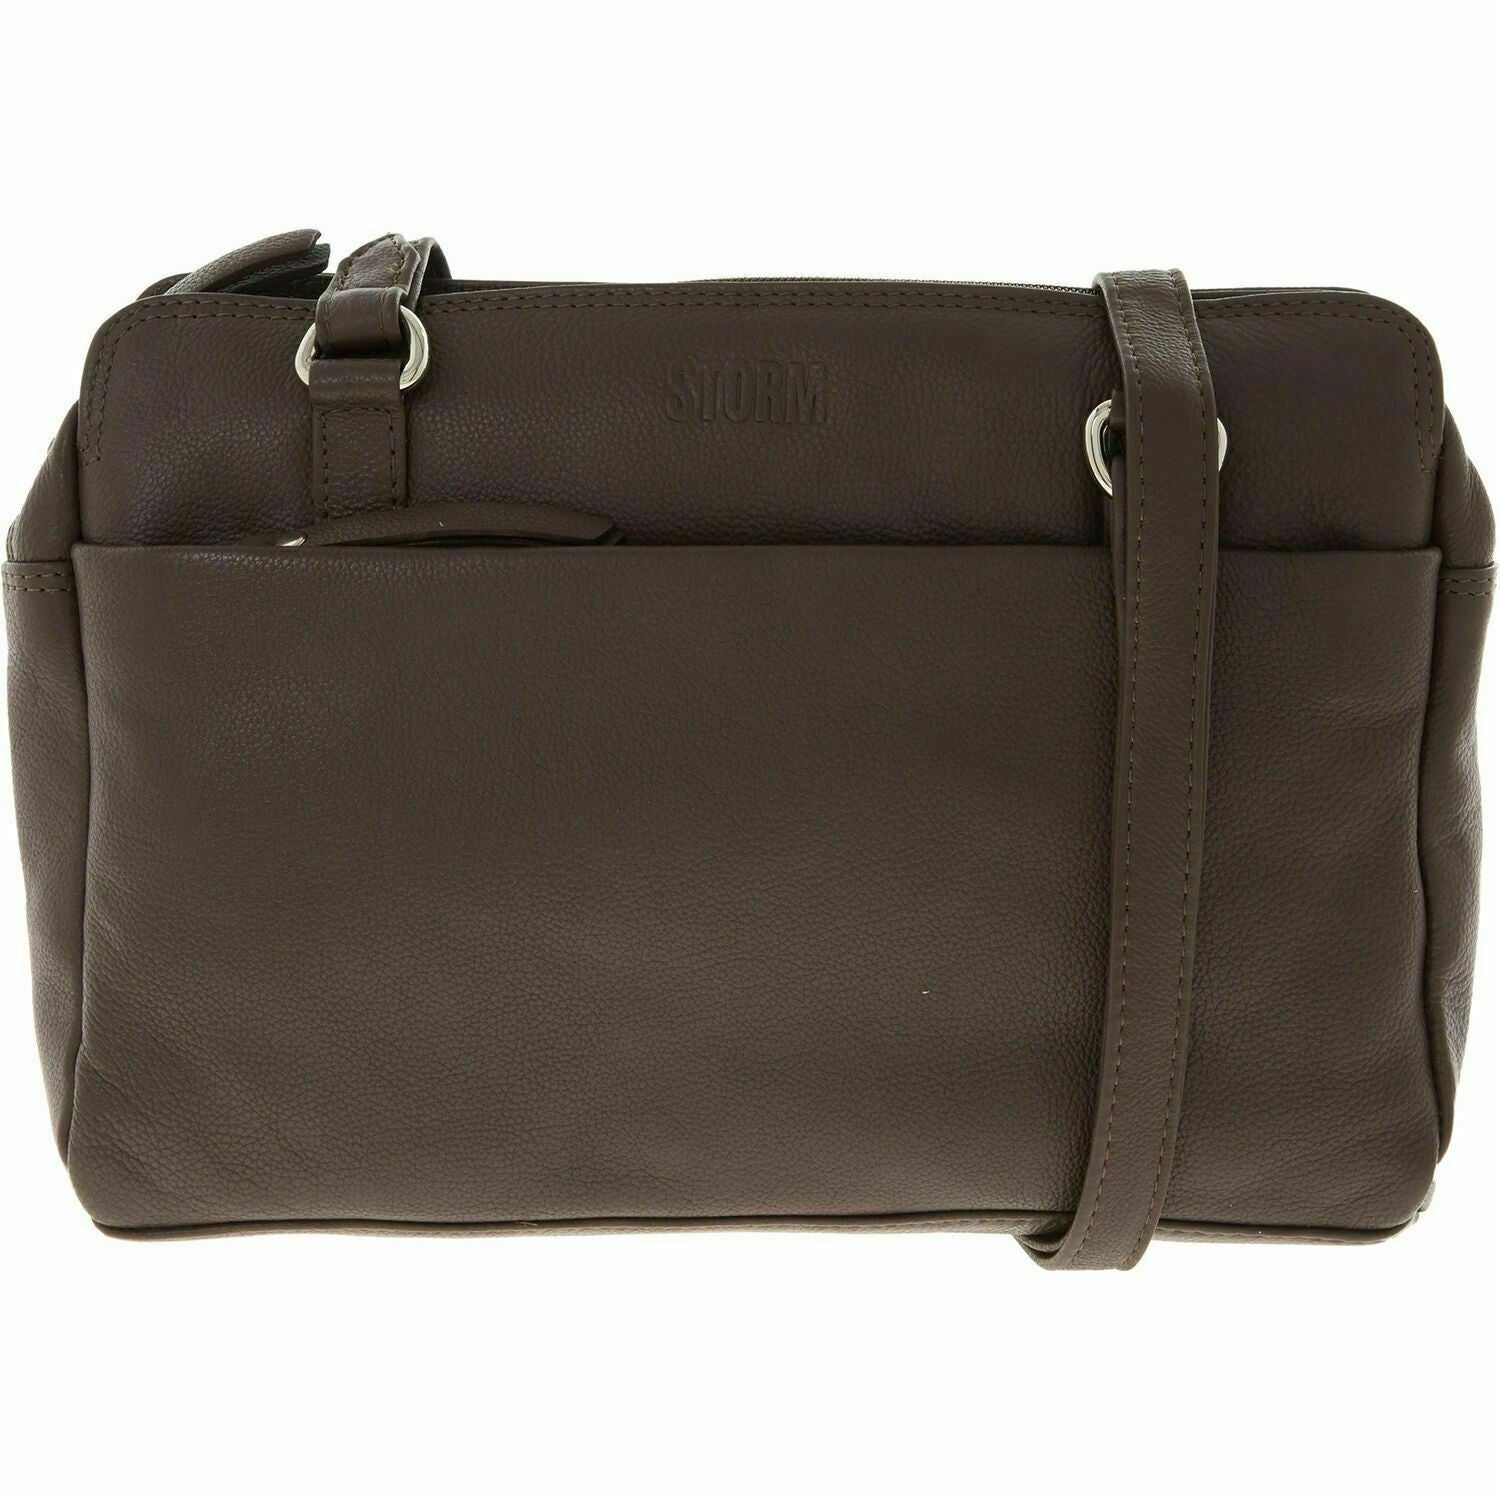 STORM Women's KESTREL Genuine Leather Small Brown Shoulder Bag, Brown